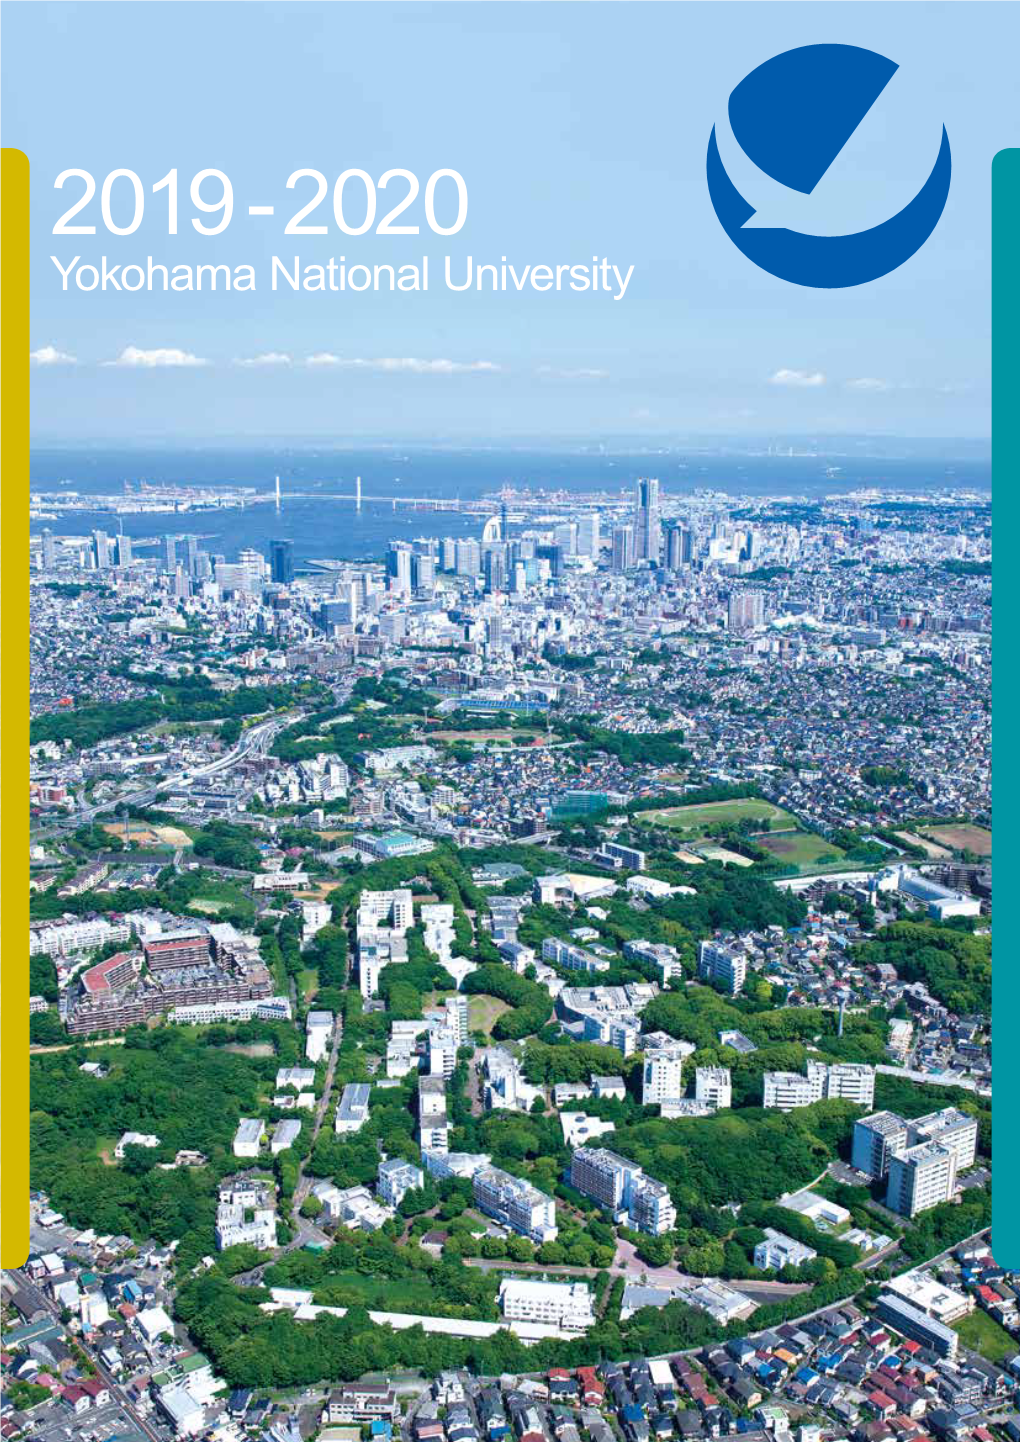 2019 - 2020 Originated from a Merging of Yokohama Normal School (Est